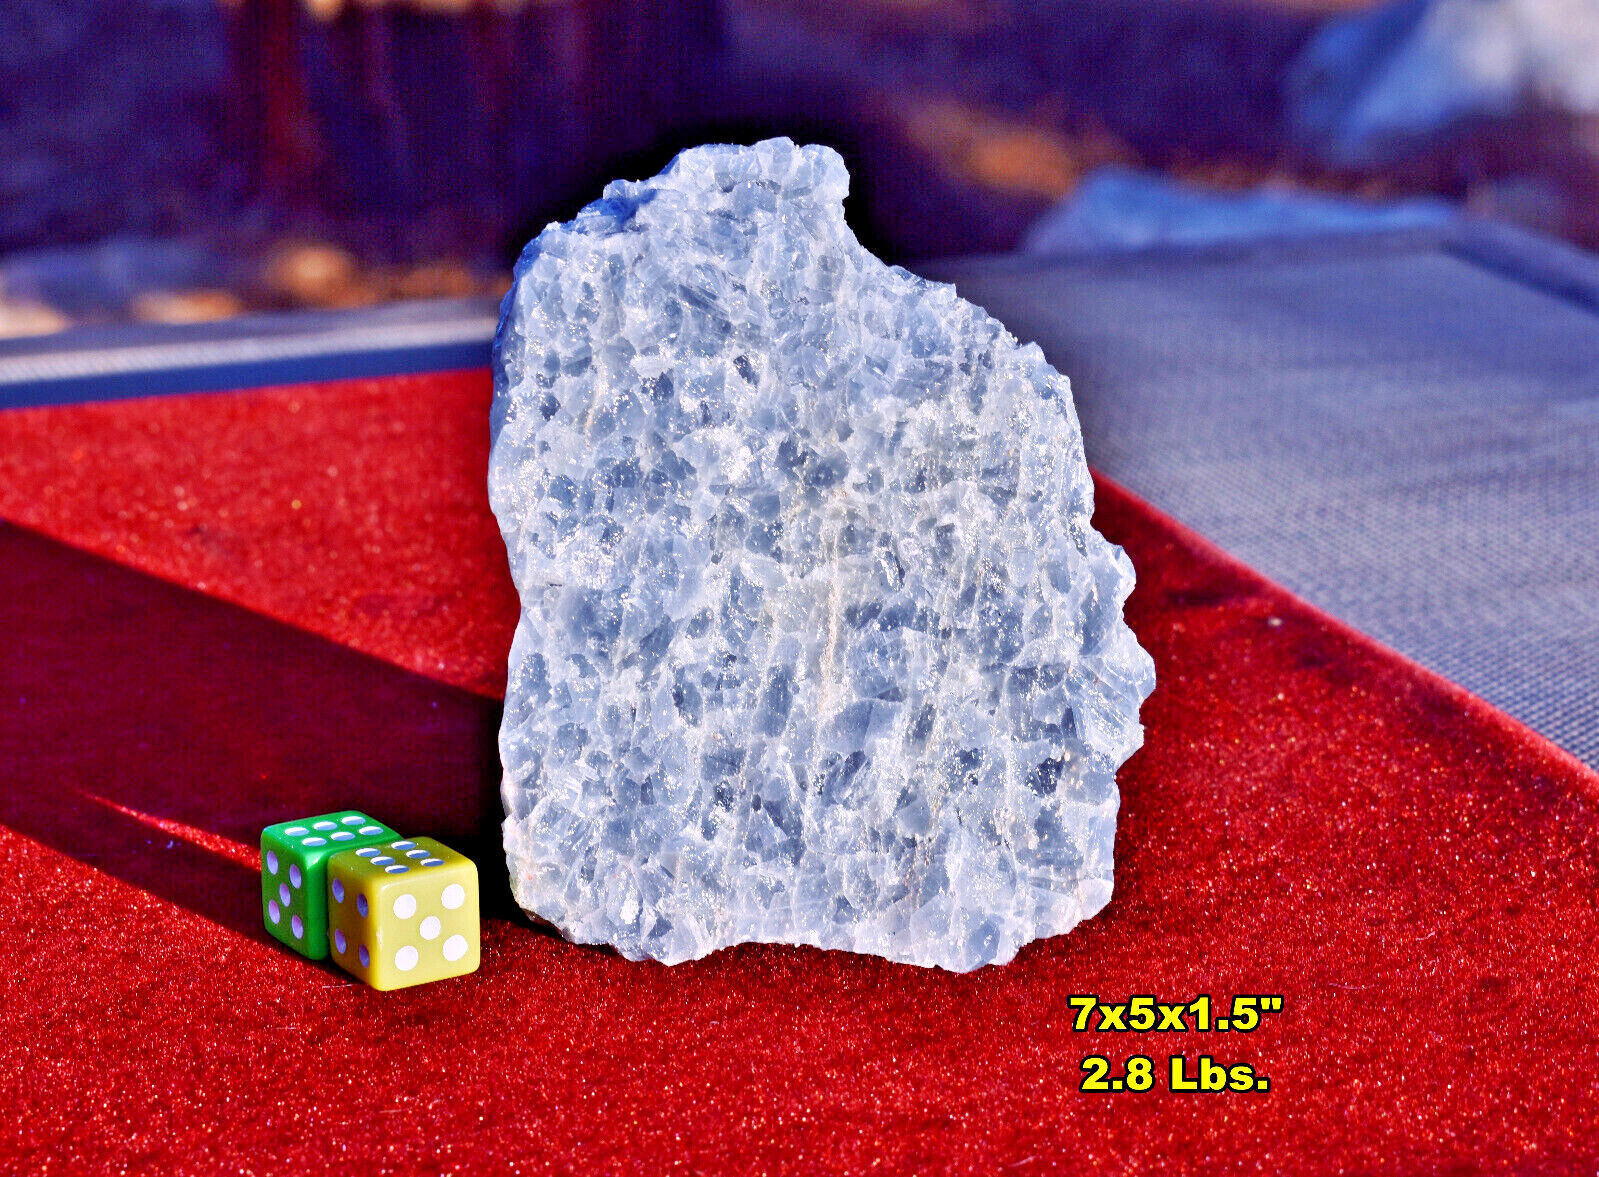 Large BLUE CALCITE Crystal Mineral Specimens * 4-7